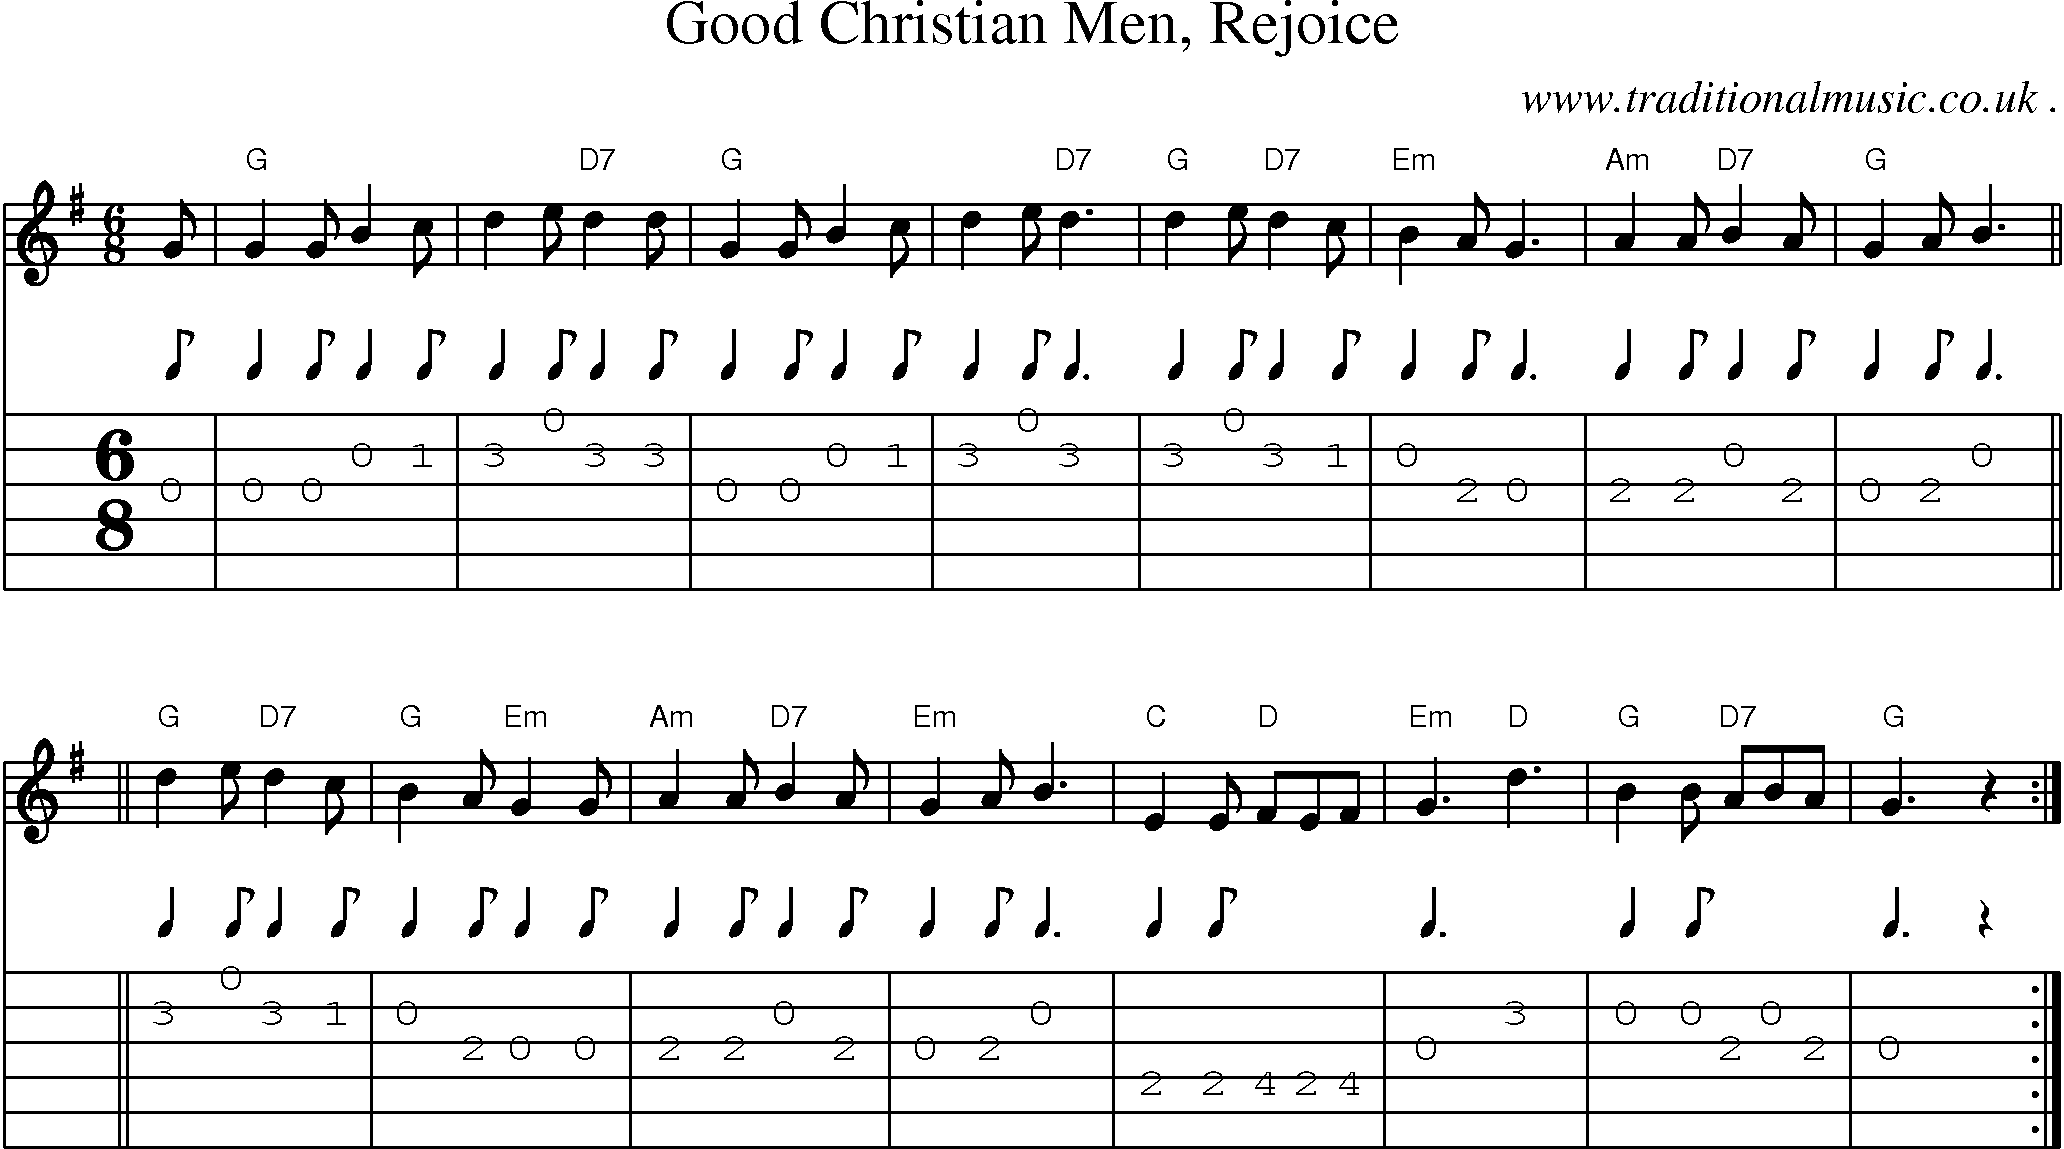 Sheet-music  score, Chords and Guitar Tabs for Good Christian Men Rejoice